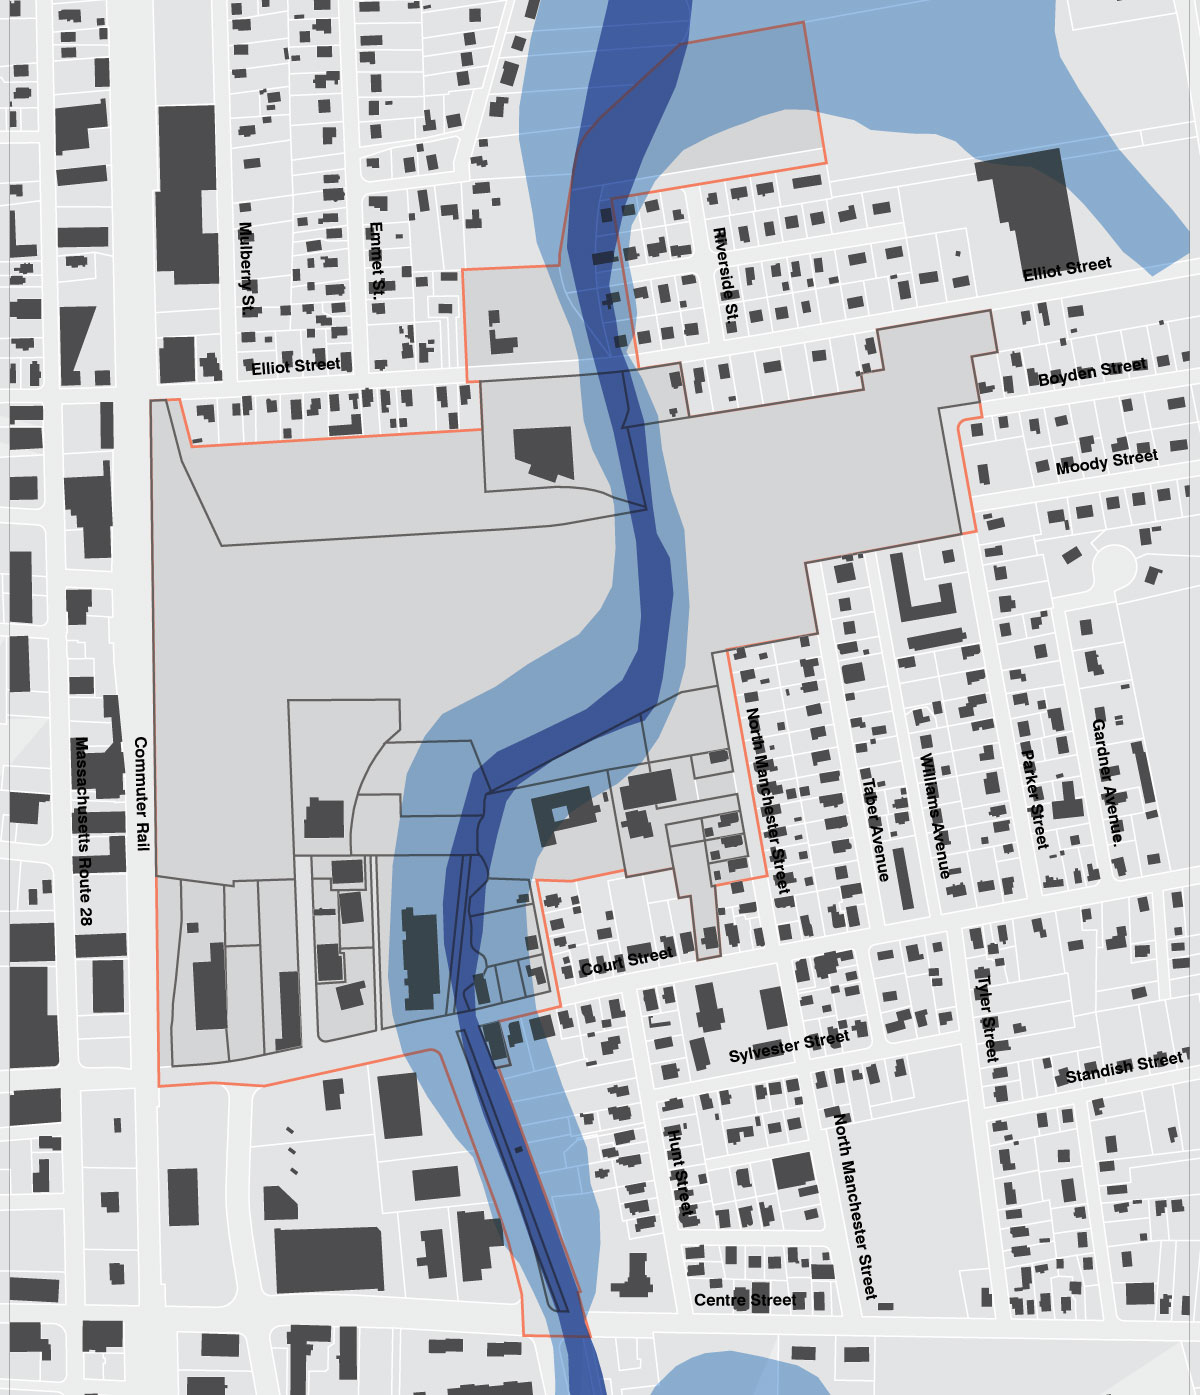 Brockton CSX buildings and flood zone map